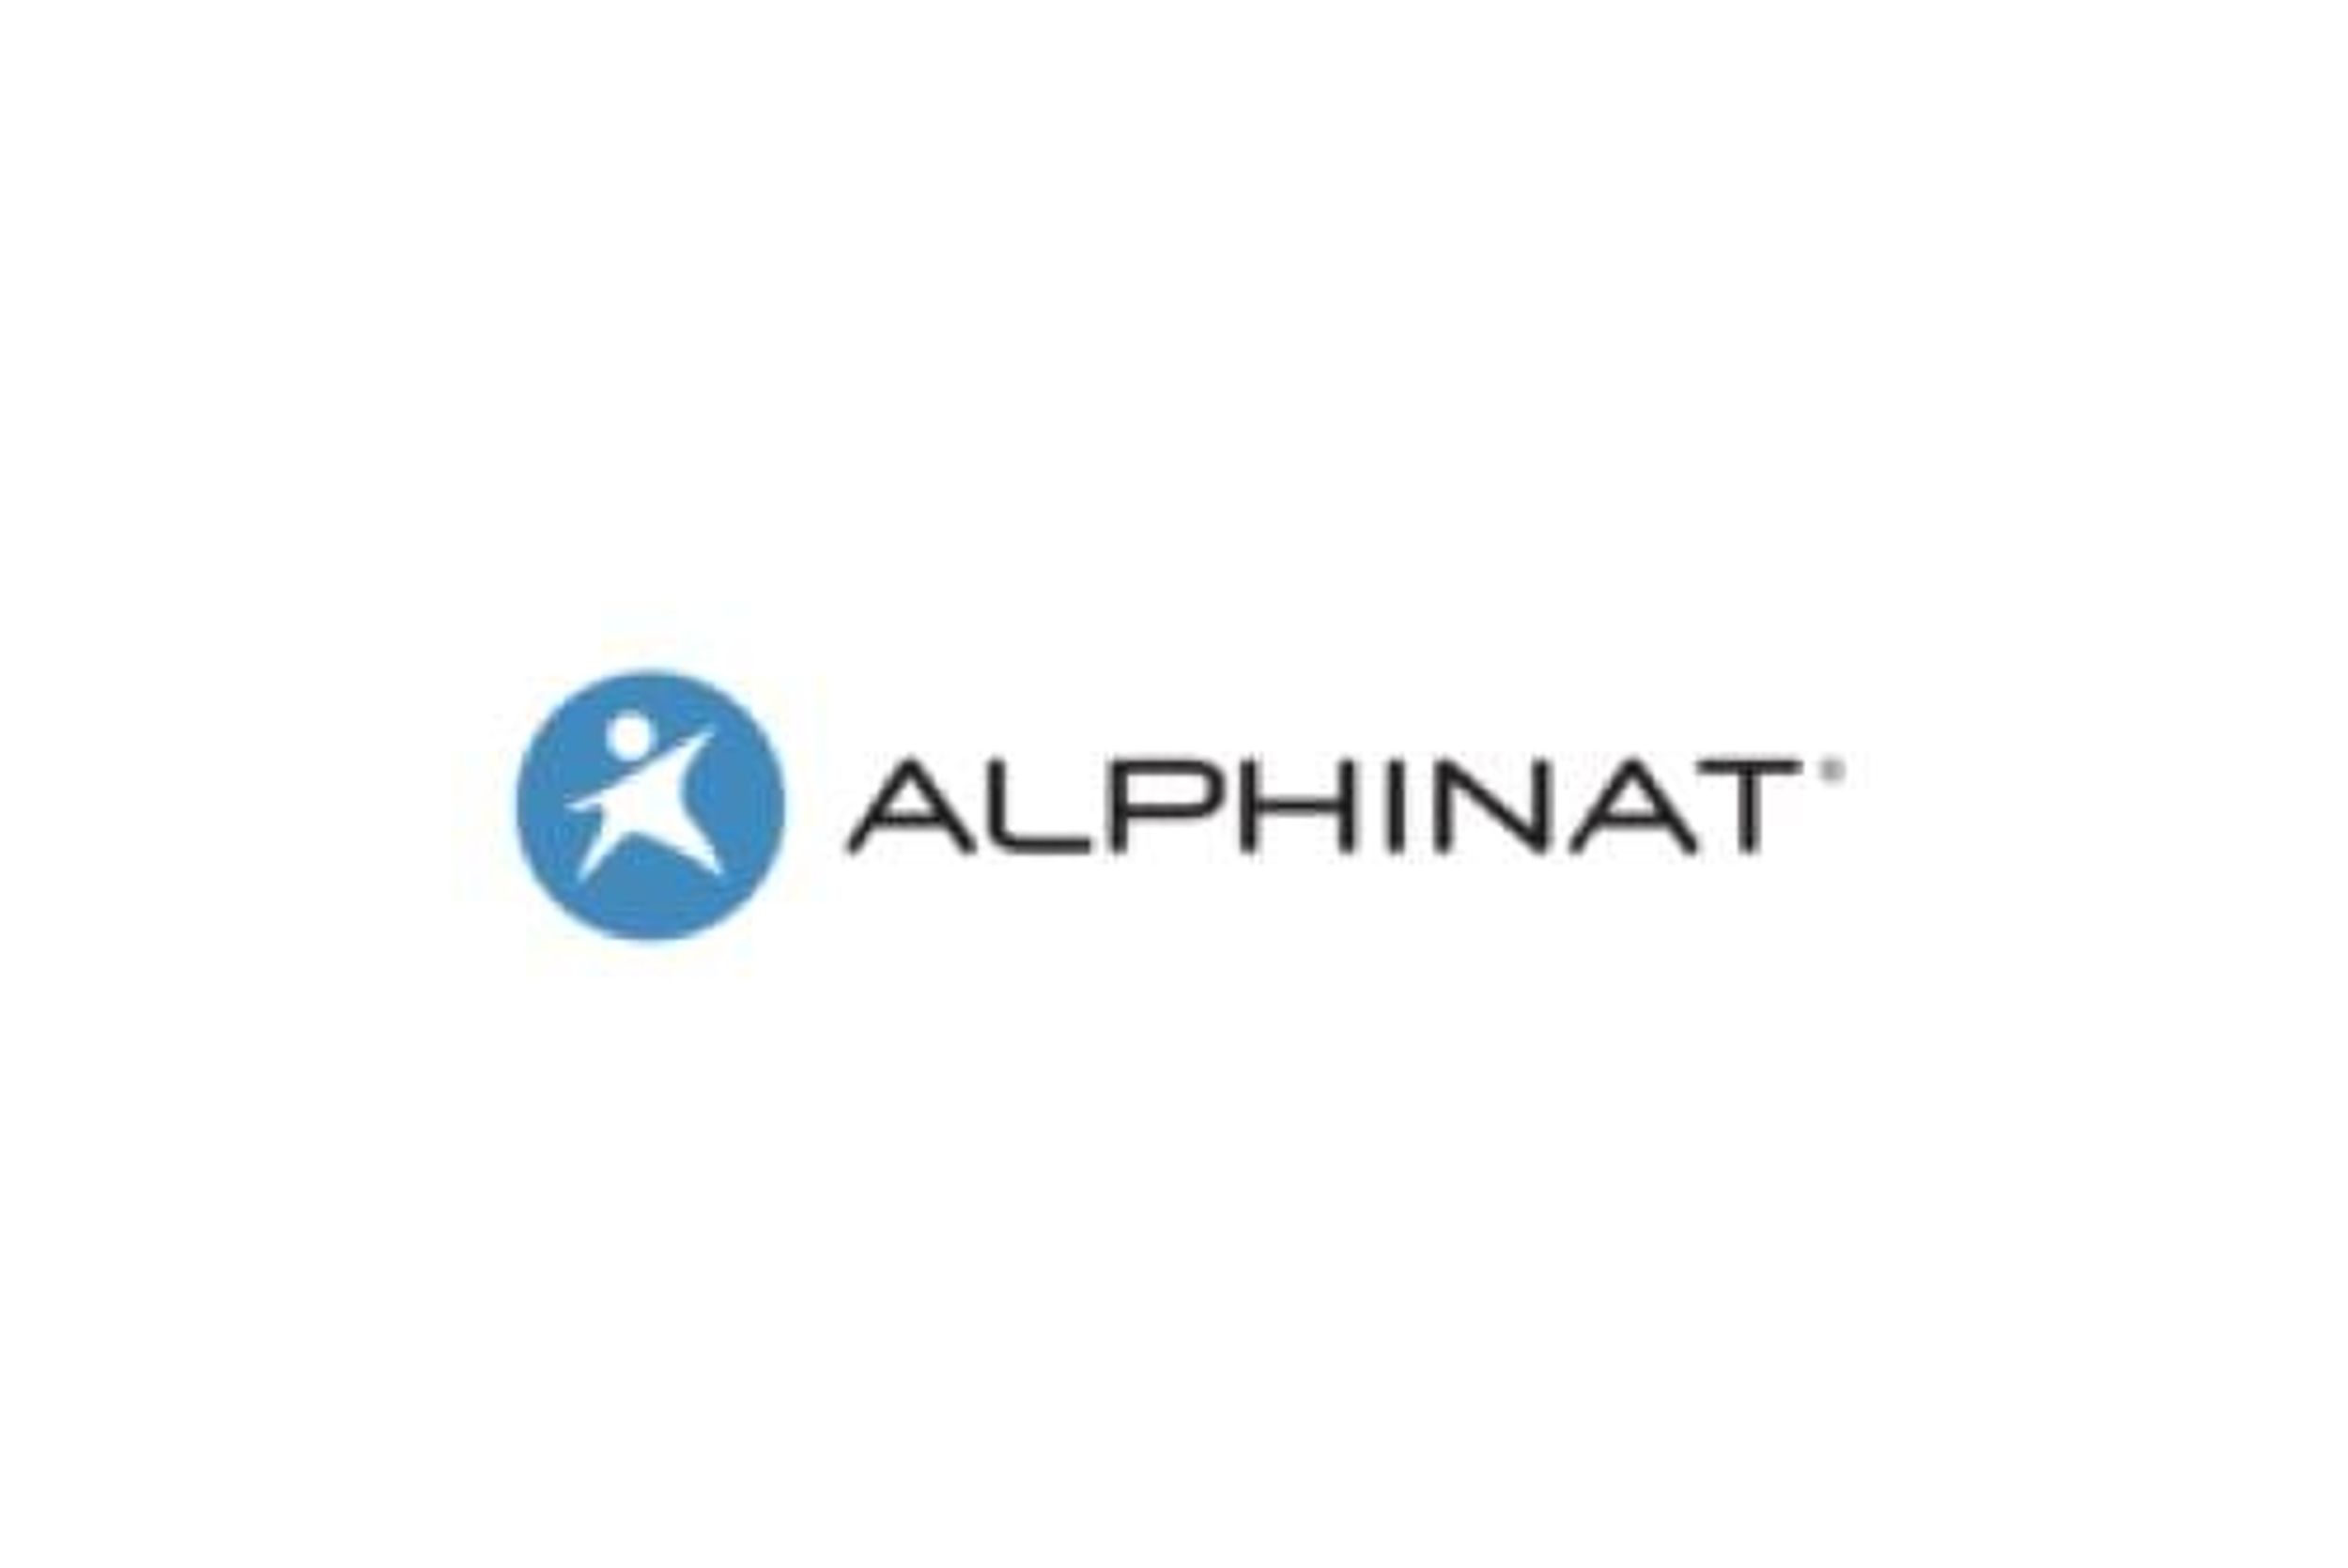 Alphinat Announces a Profit of $122,358 for Fiscal Quarter Ended November 30, 2021